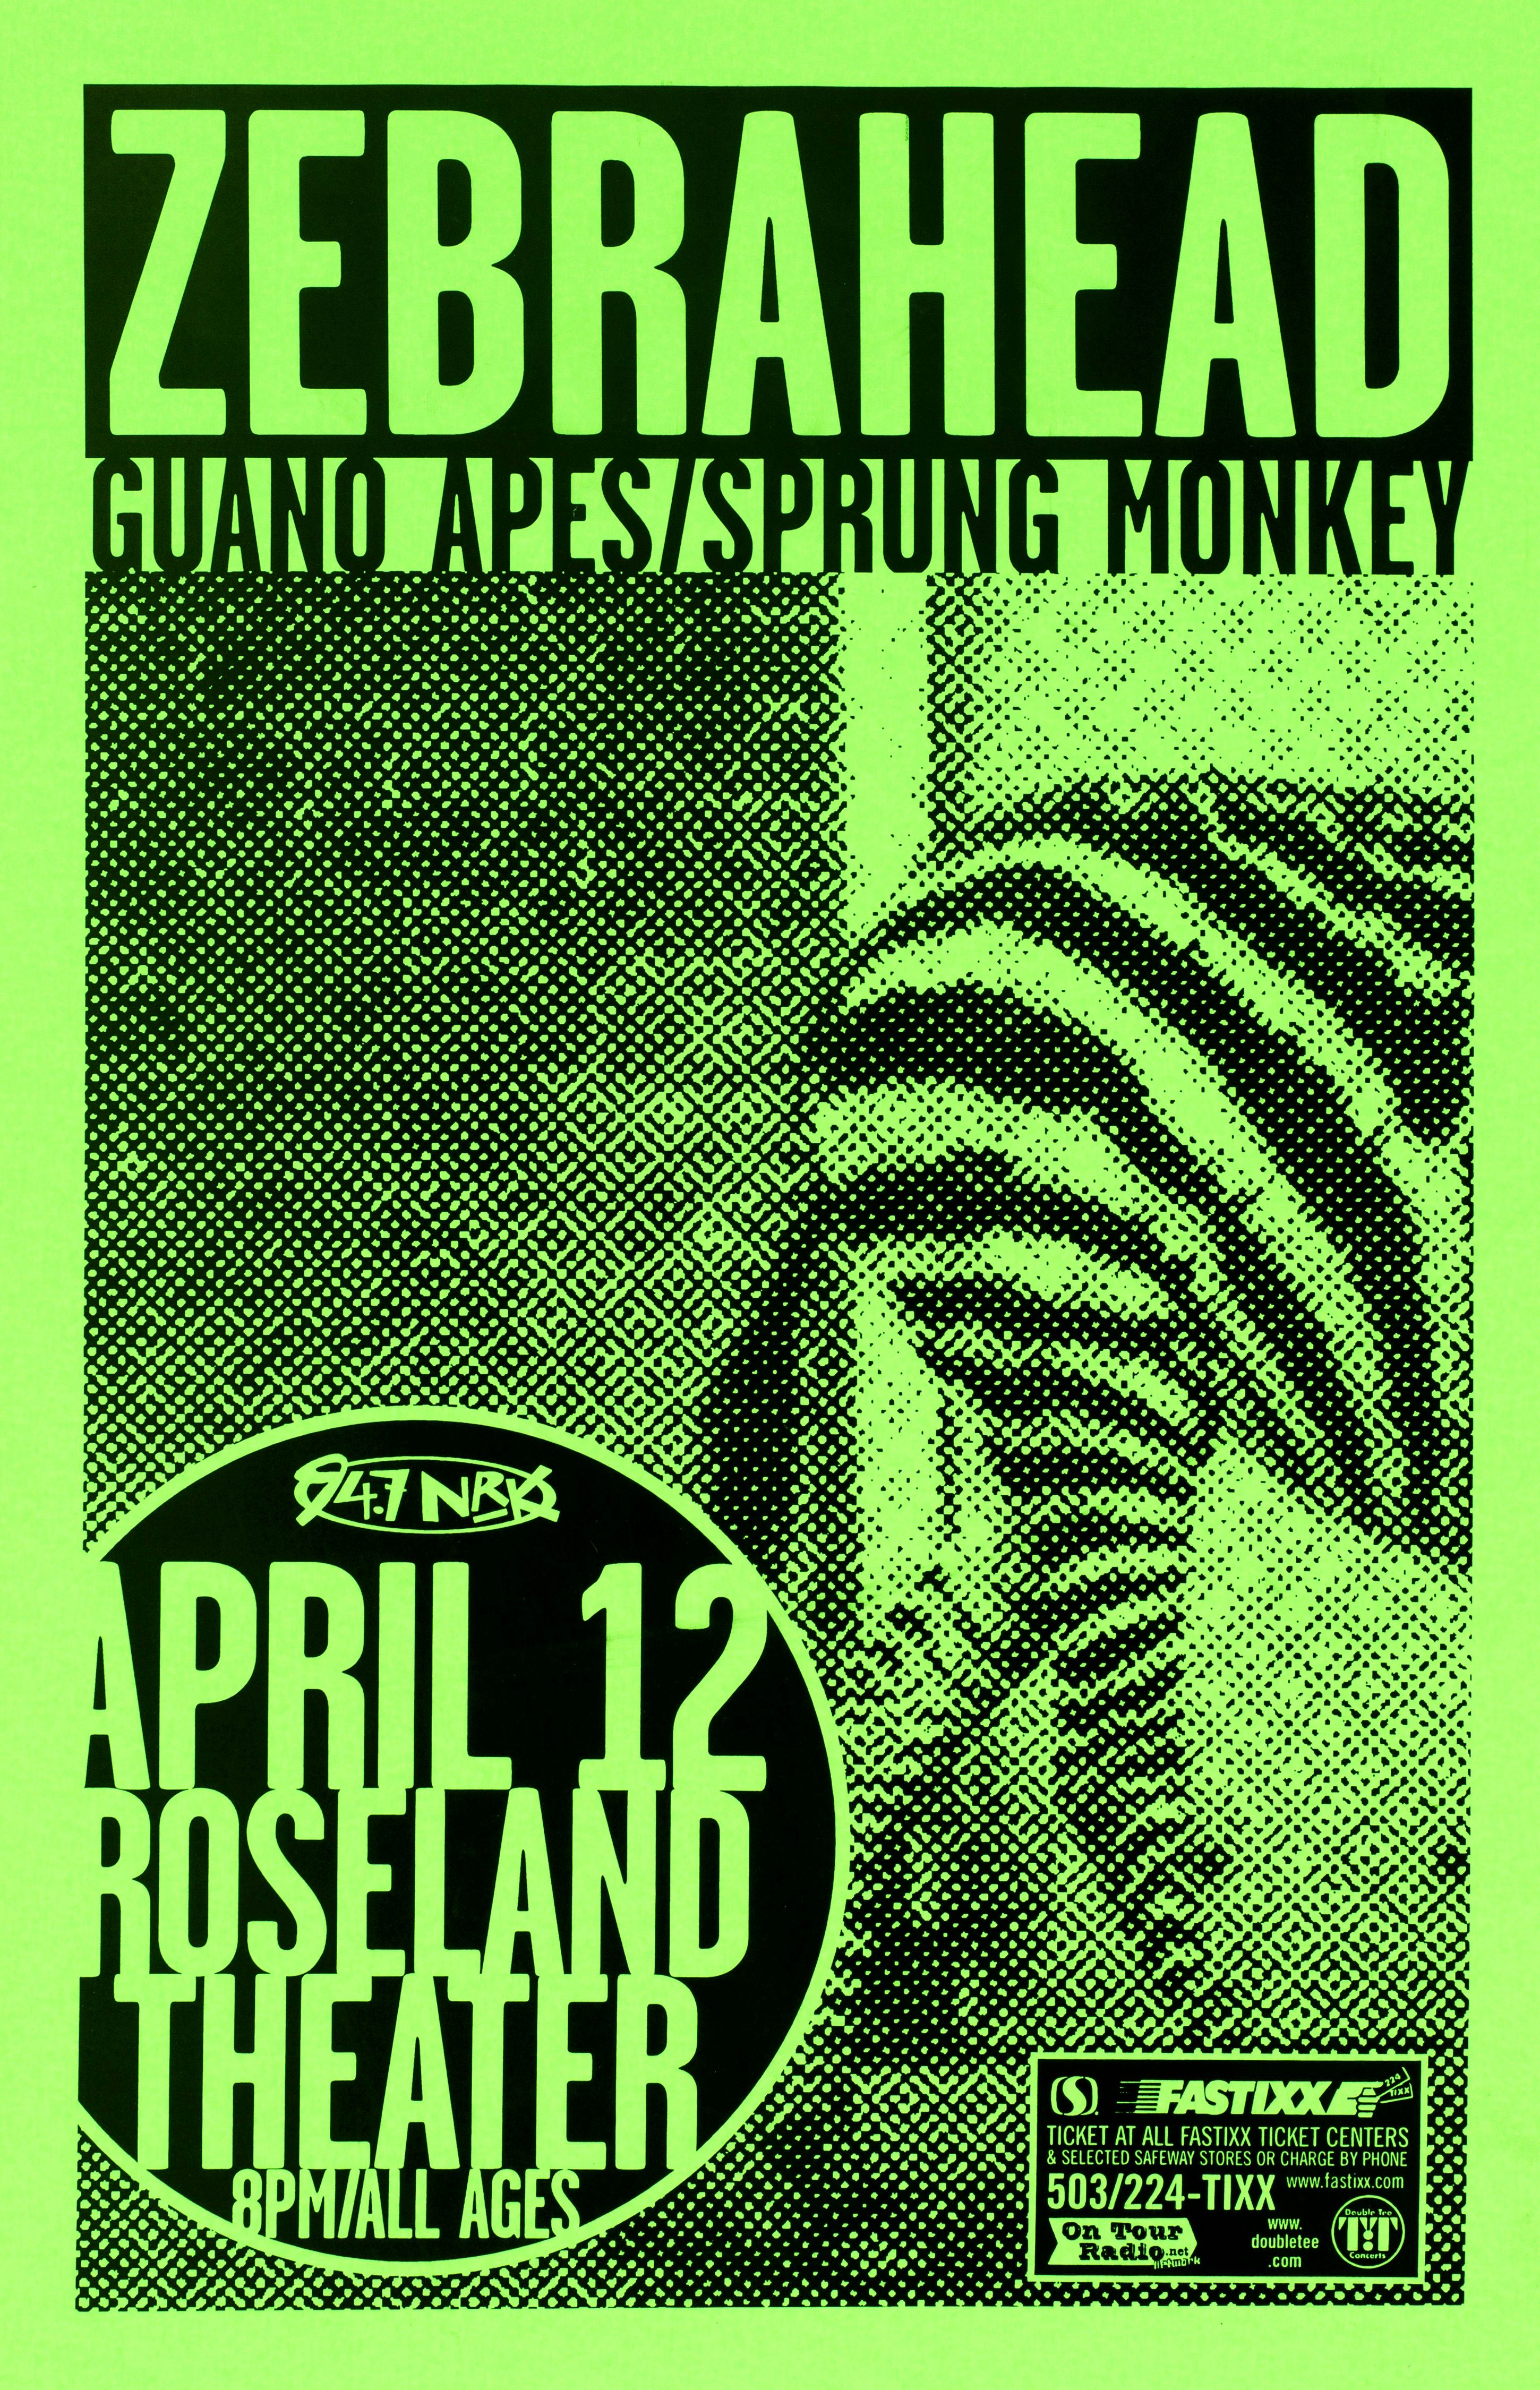 MXP-171.5 Zebrahead 2001 Roseland Theater  Apr 12 Concert Poster